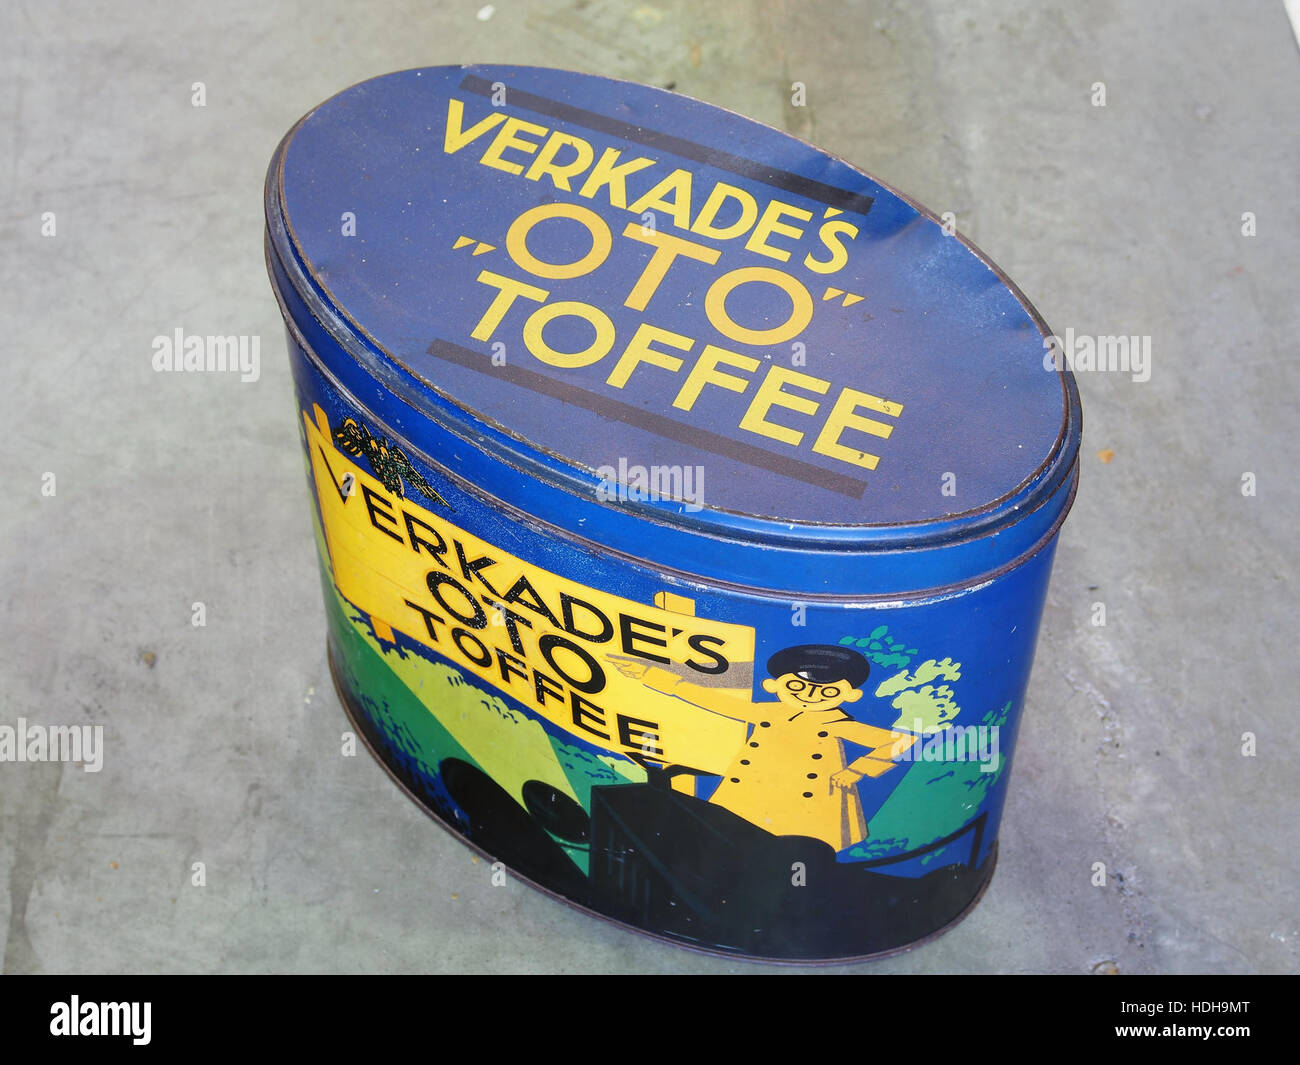 Verkade's Oto toffee blik pic2 Stock Photo - Alamy